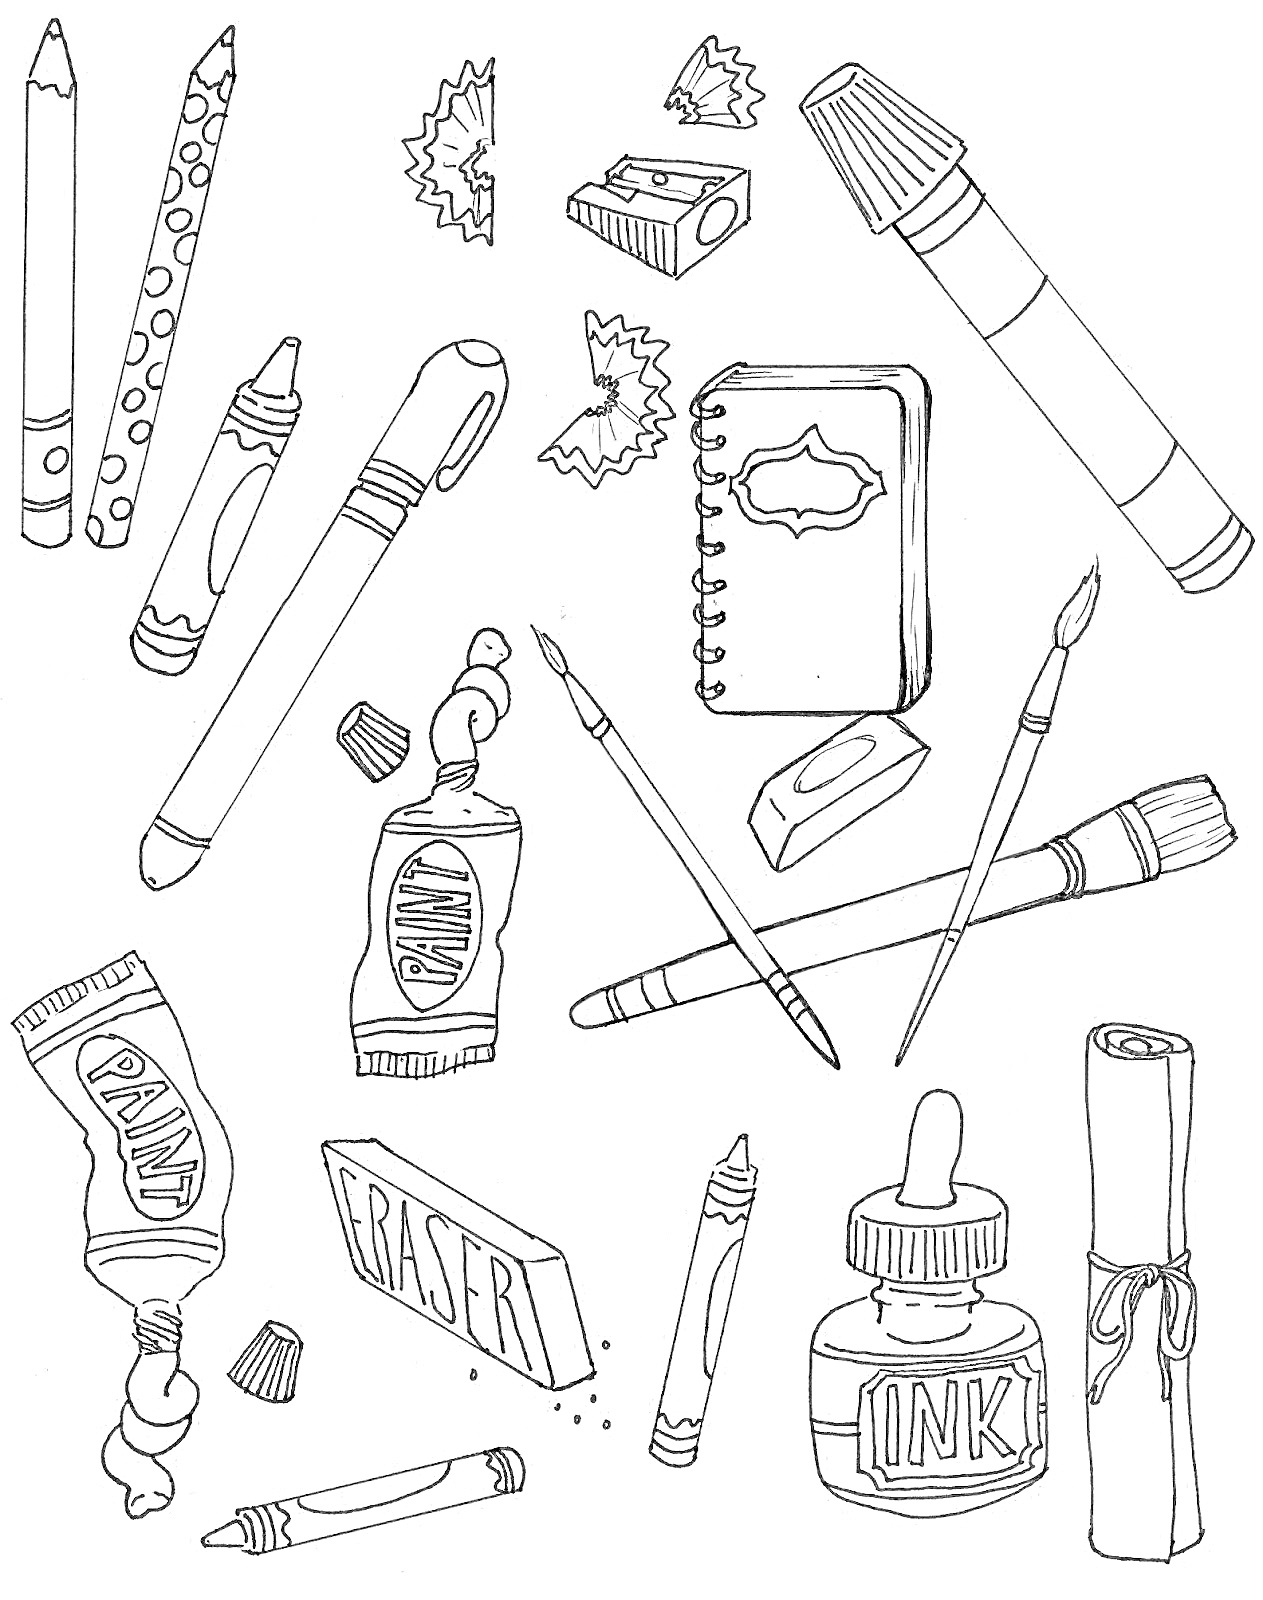 Канцелярские принадлежности (карандаши, ручки, точилки, линейка, краска, тюбик с краской, кисти, блокнот, стерка, чернильница, свиток)